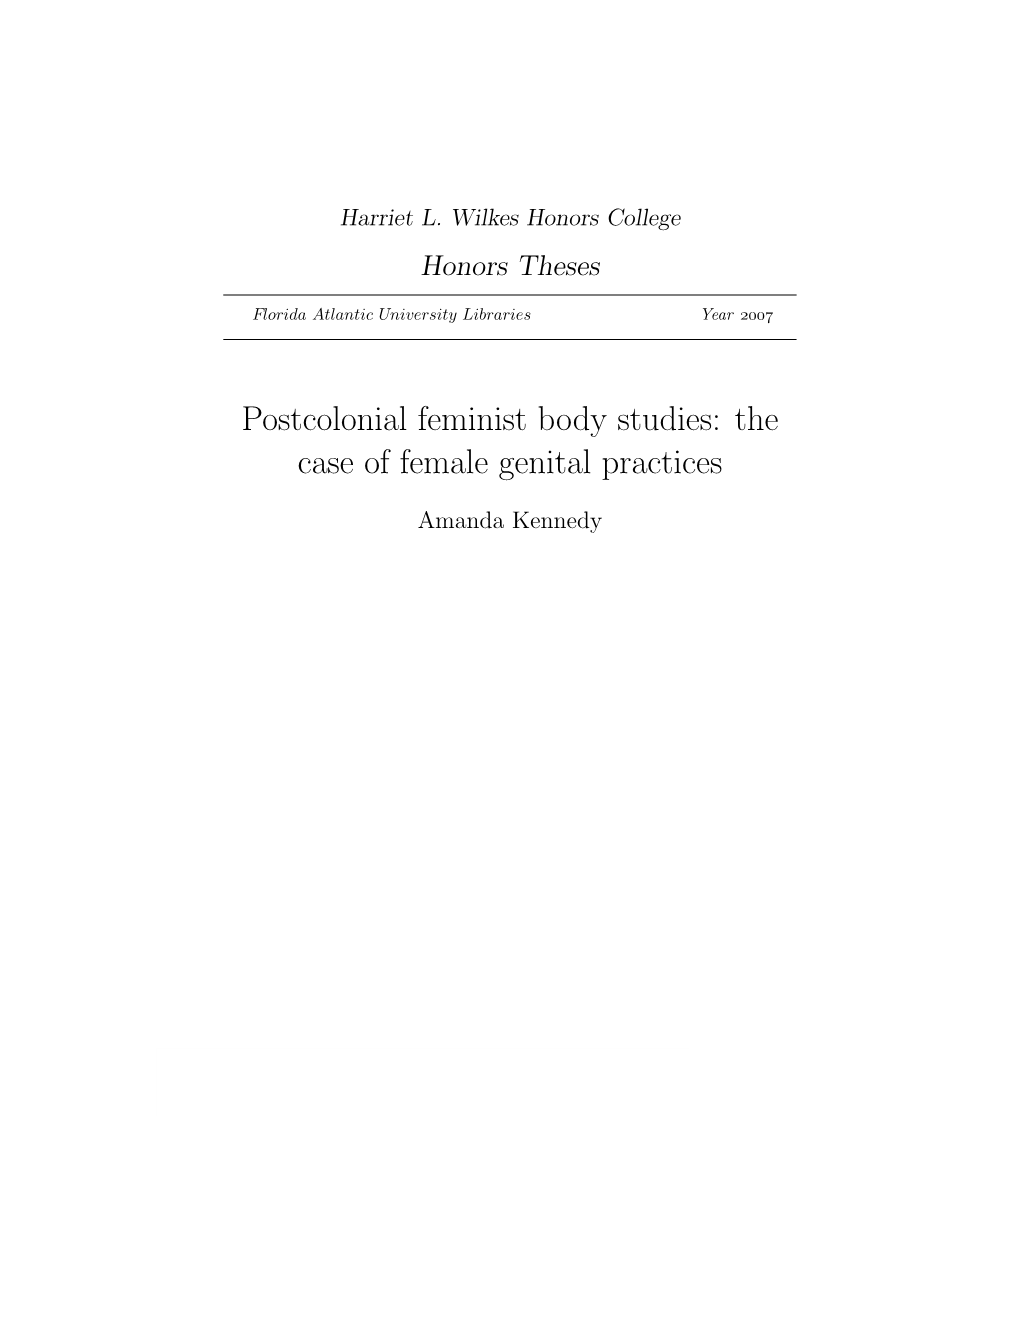 Postcolonial Feminist Body Studies: the Case of Female Genital Practices